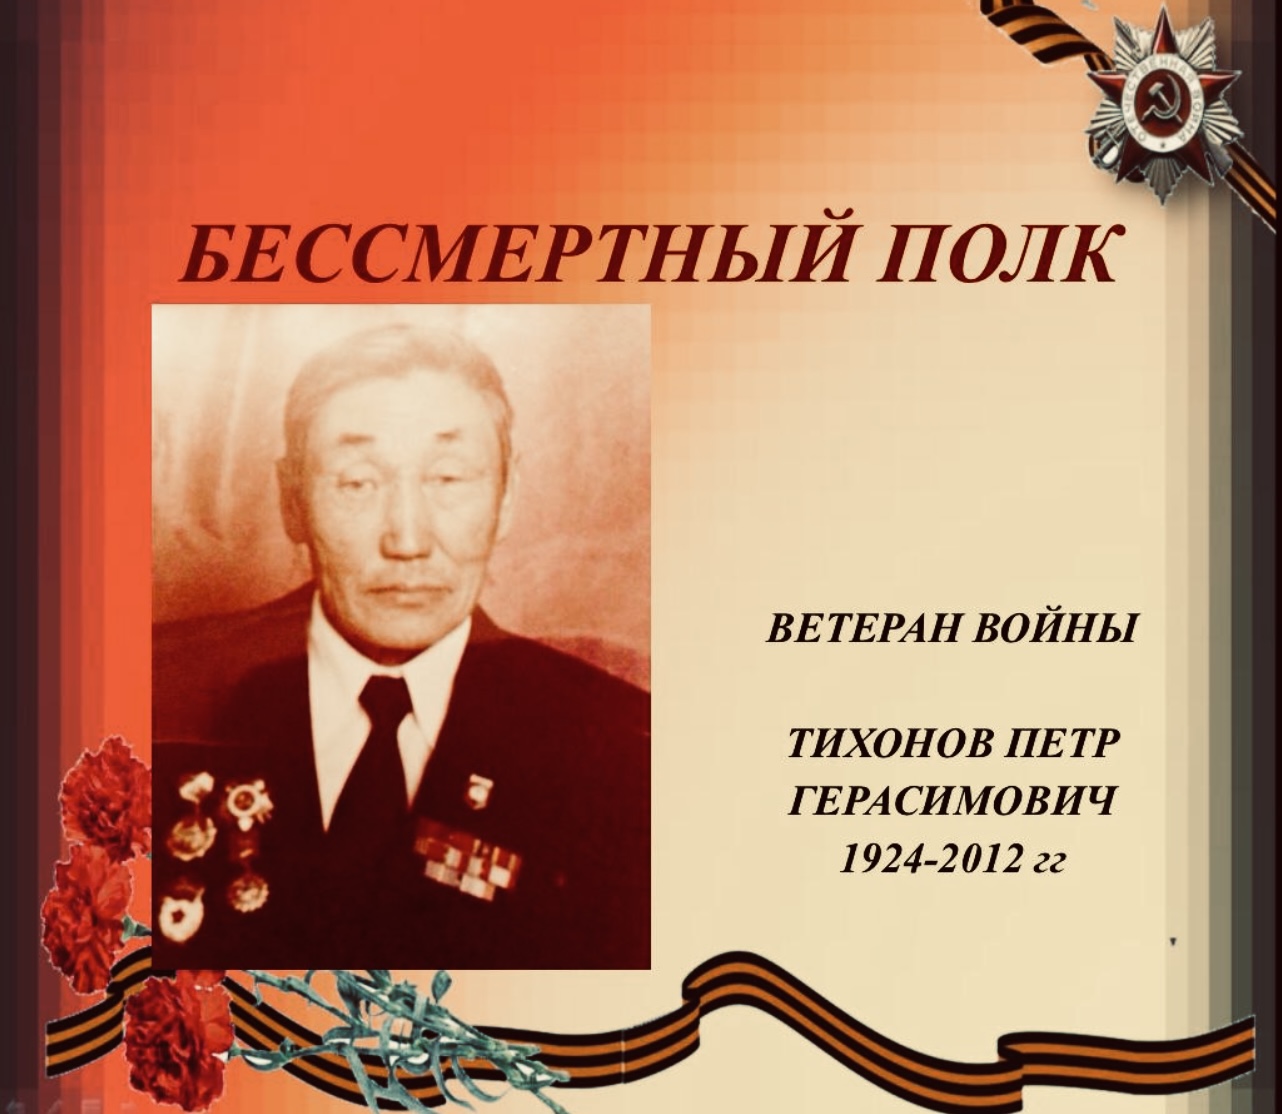 Тихонов Петр Герасимович